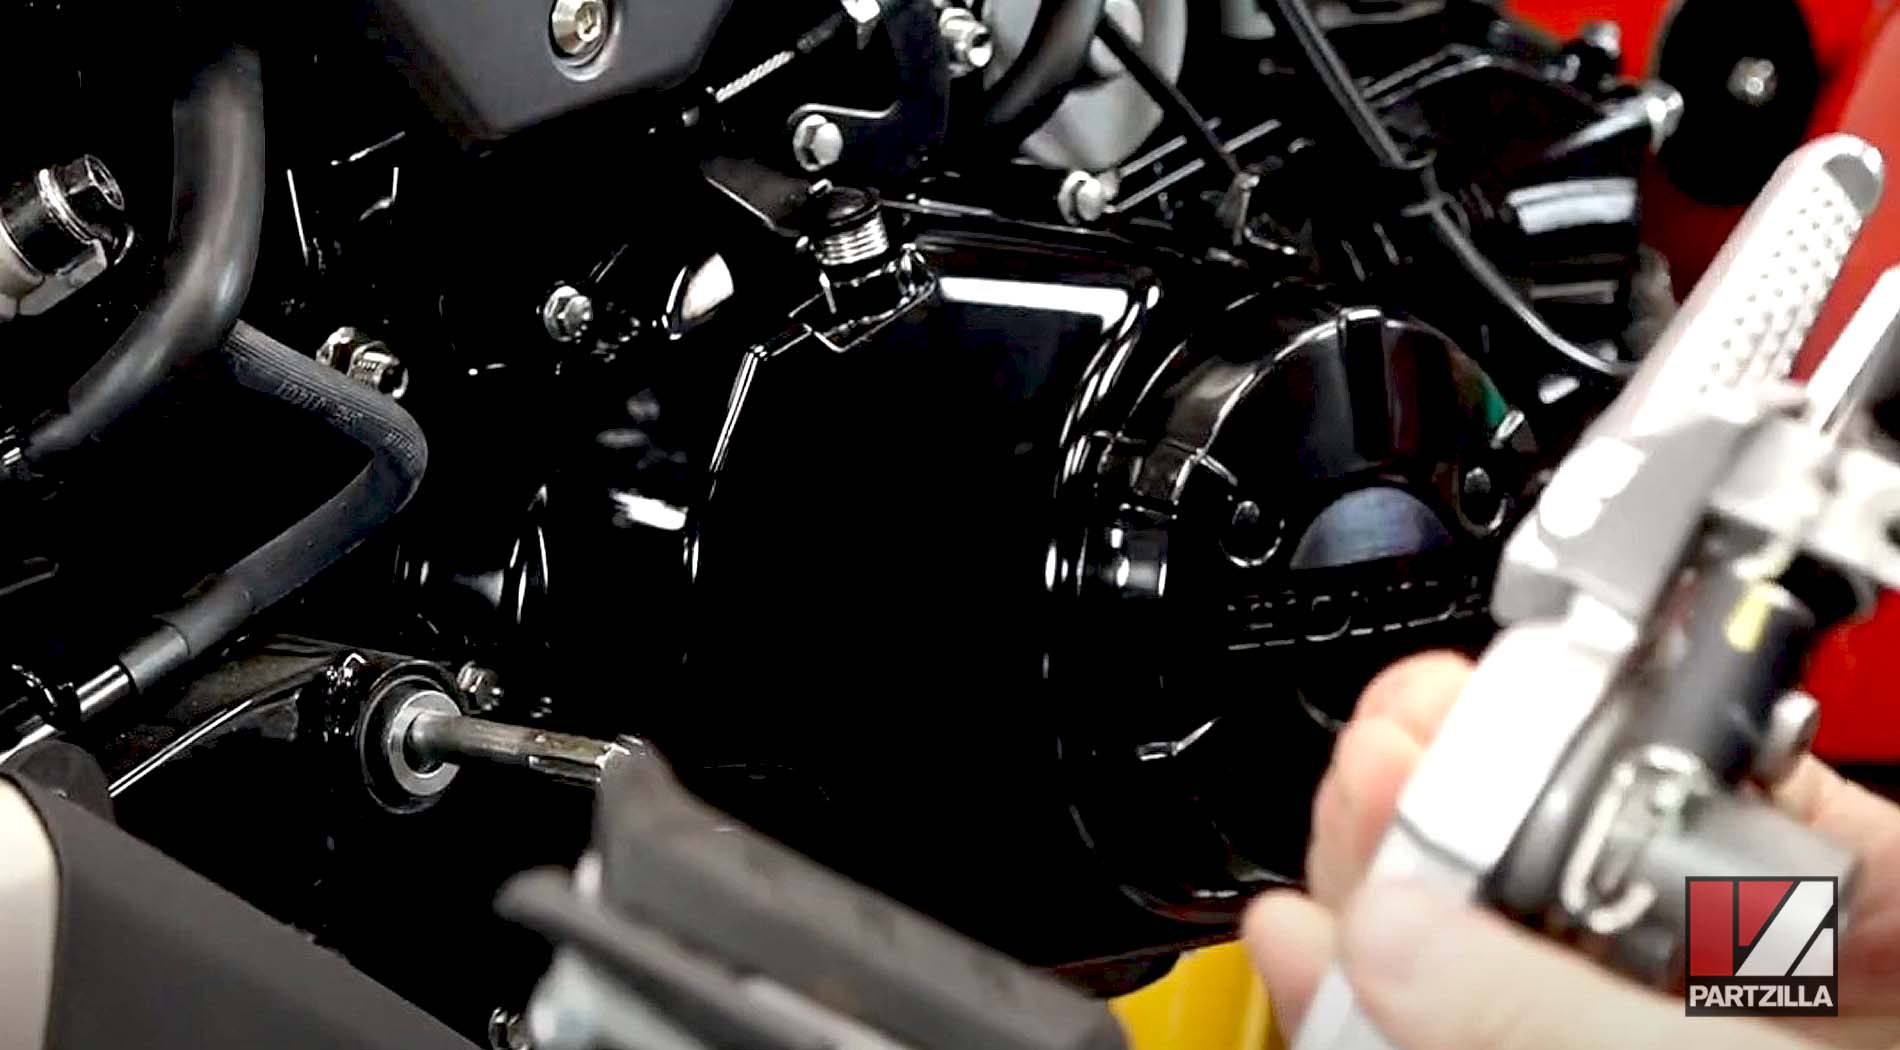 Honda Grom rearset mod master cylinder removal